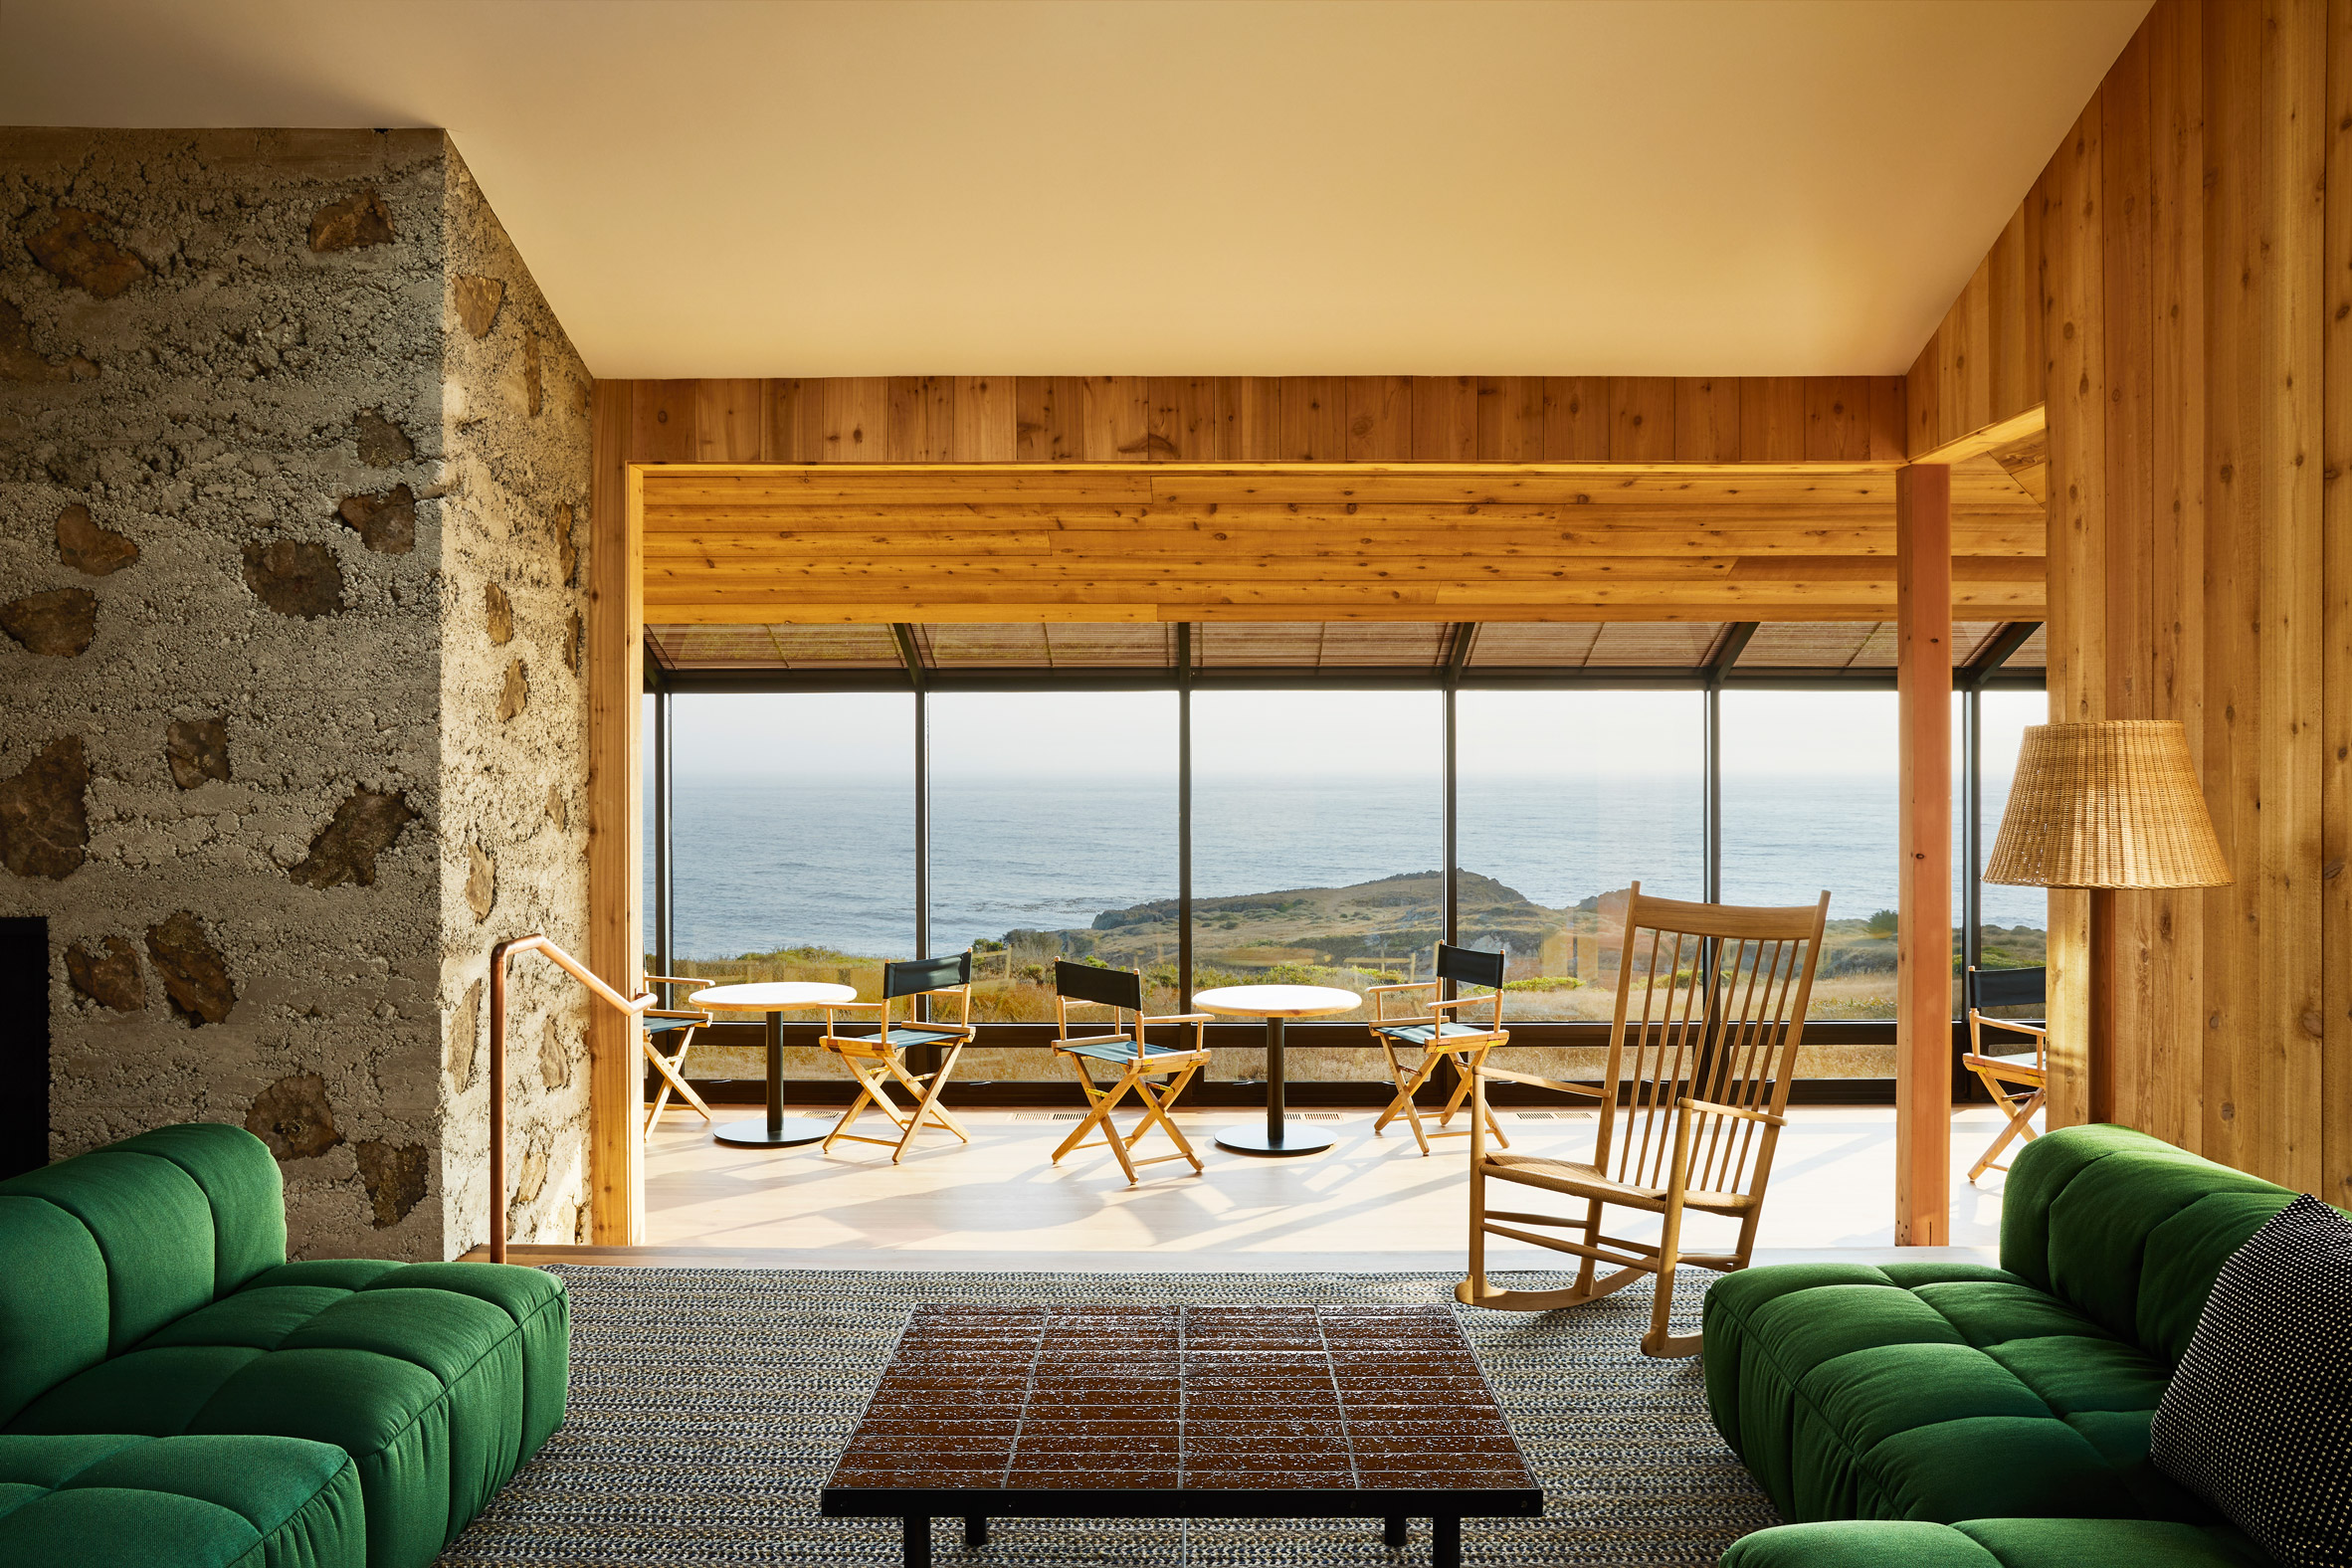 Sea ranch lodge renovation interior